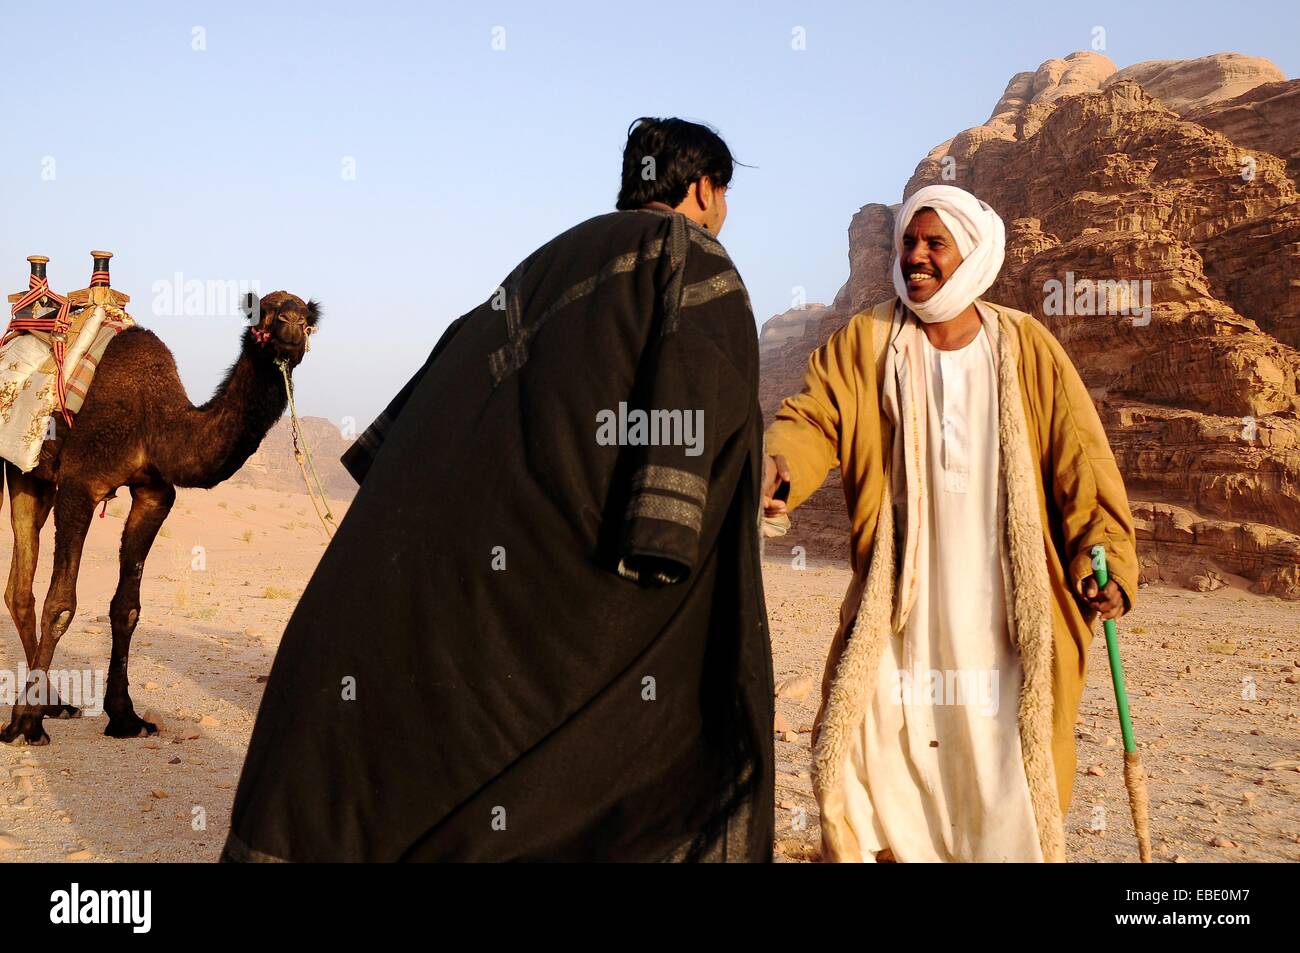 men with camels Wadi Rum desert Jordan Middle East Stock Photo Alamy